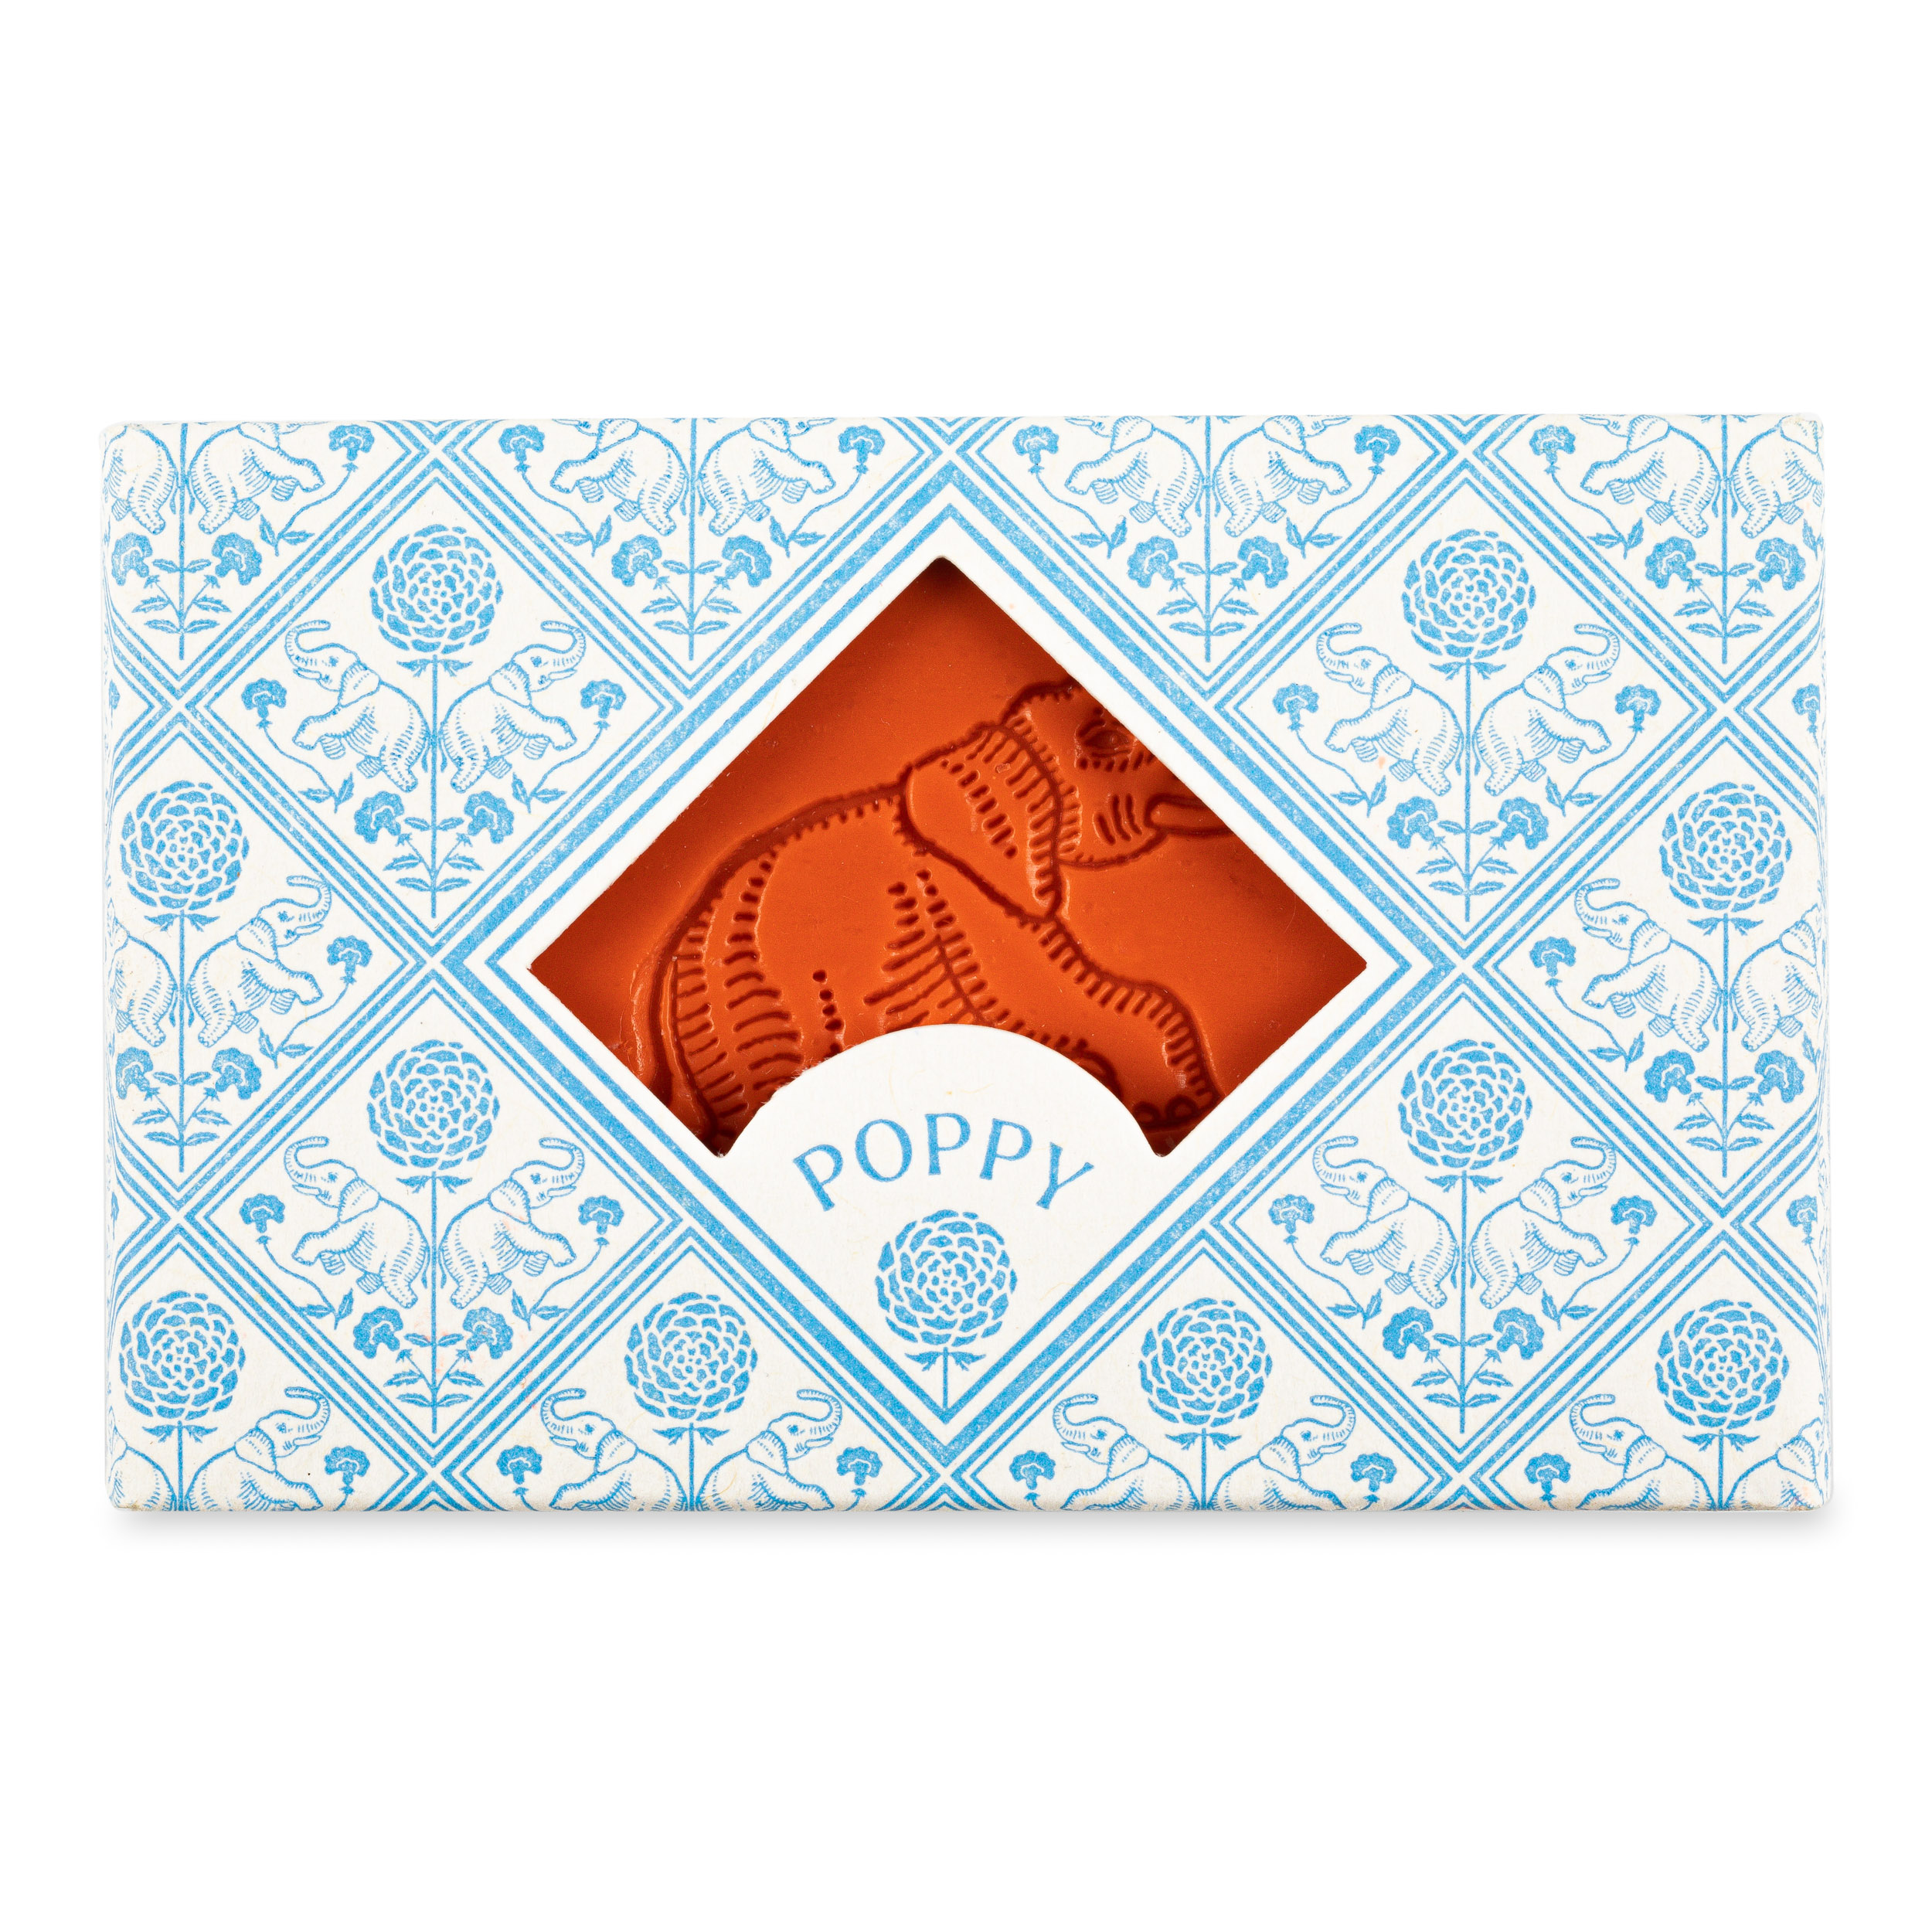 L'éléphant Poppy Hand Soap - Soap - Archivist - from Archivist Gallery 